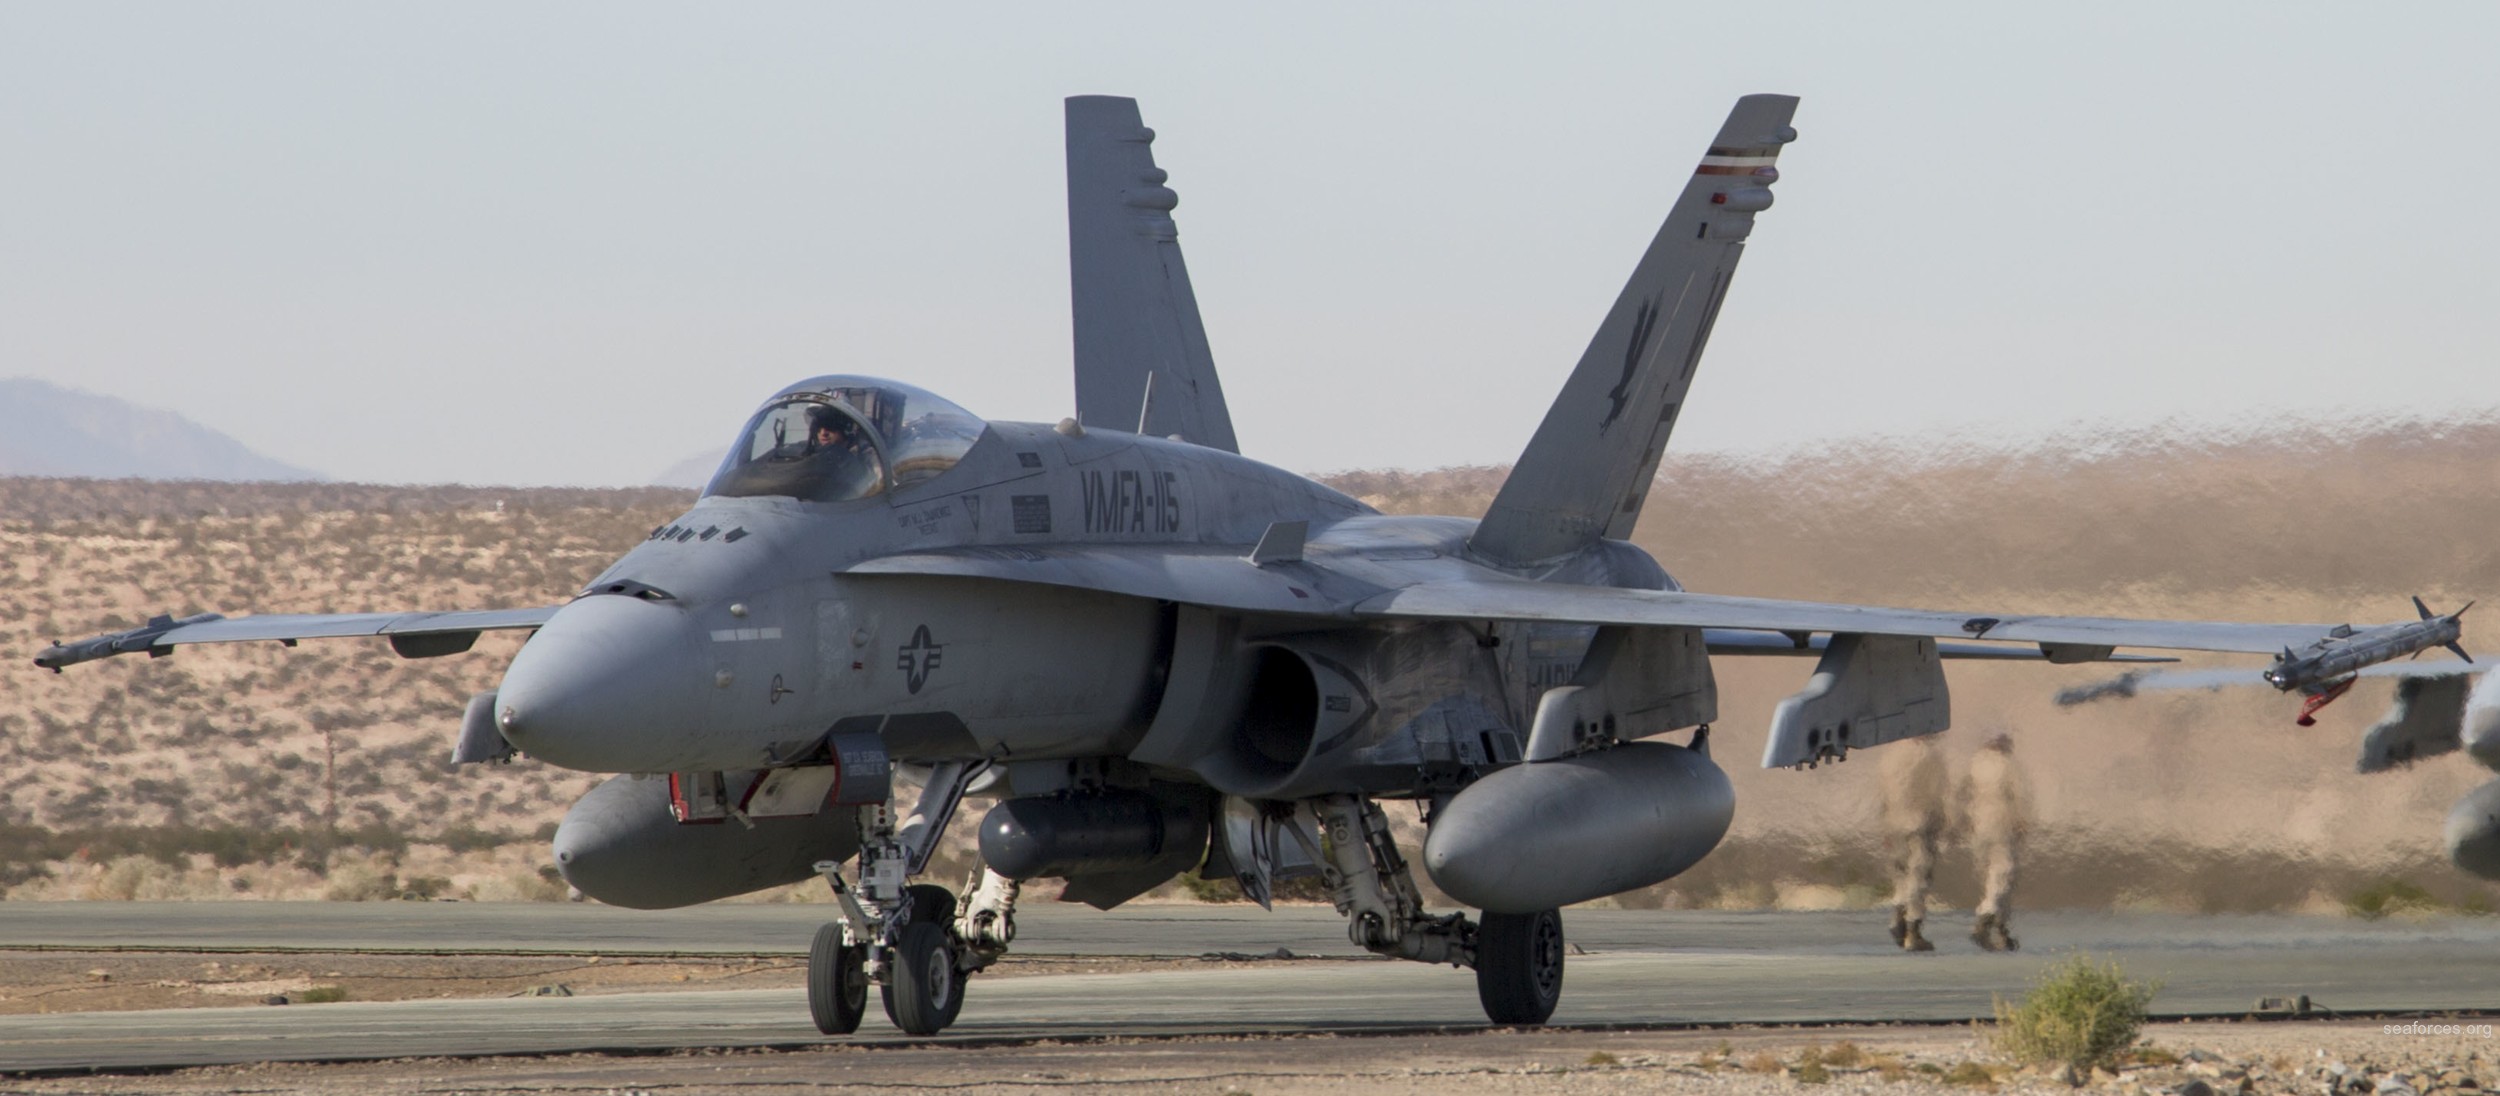 vmfa-115 silver eagles marine fighter attack squadron f/a-18a+ hornet 108 29 palms